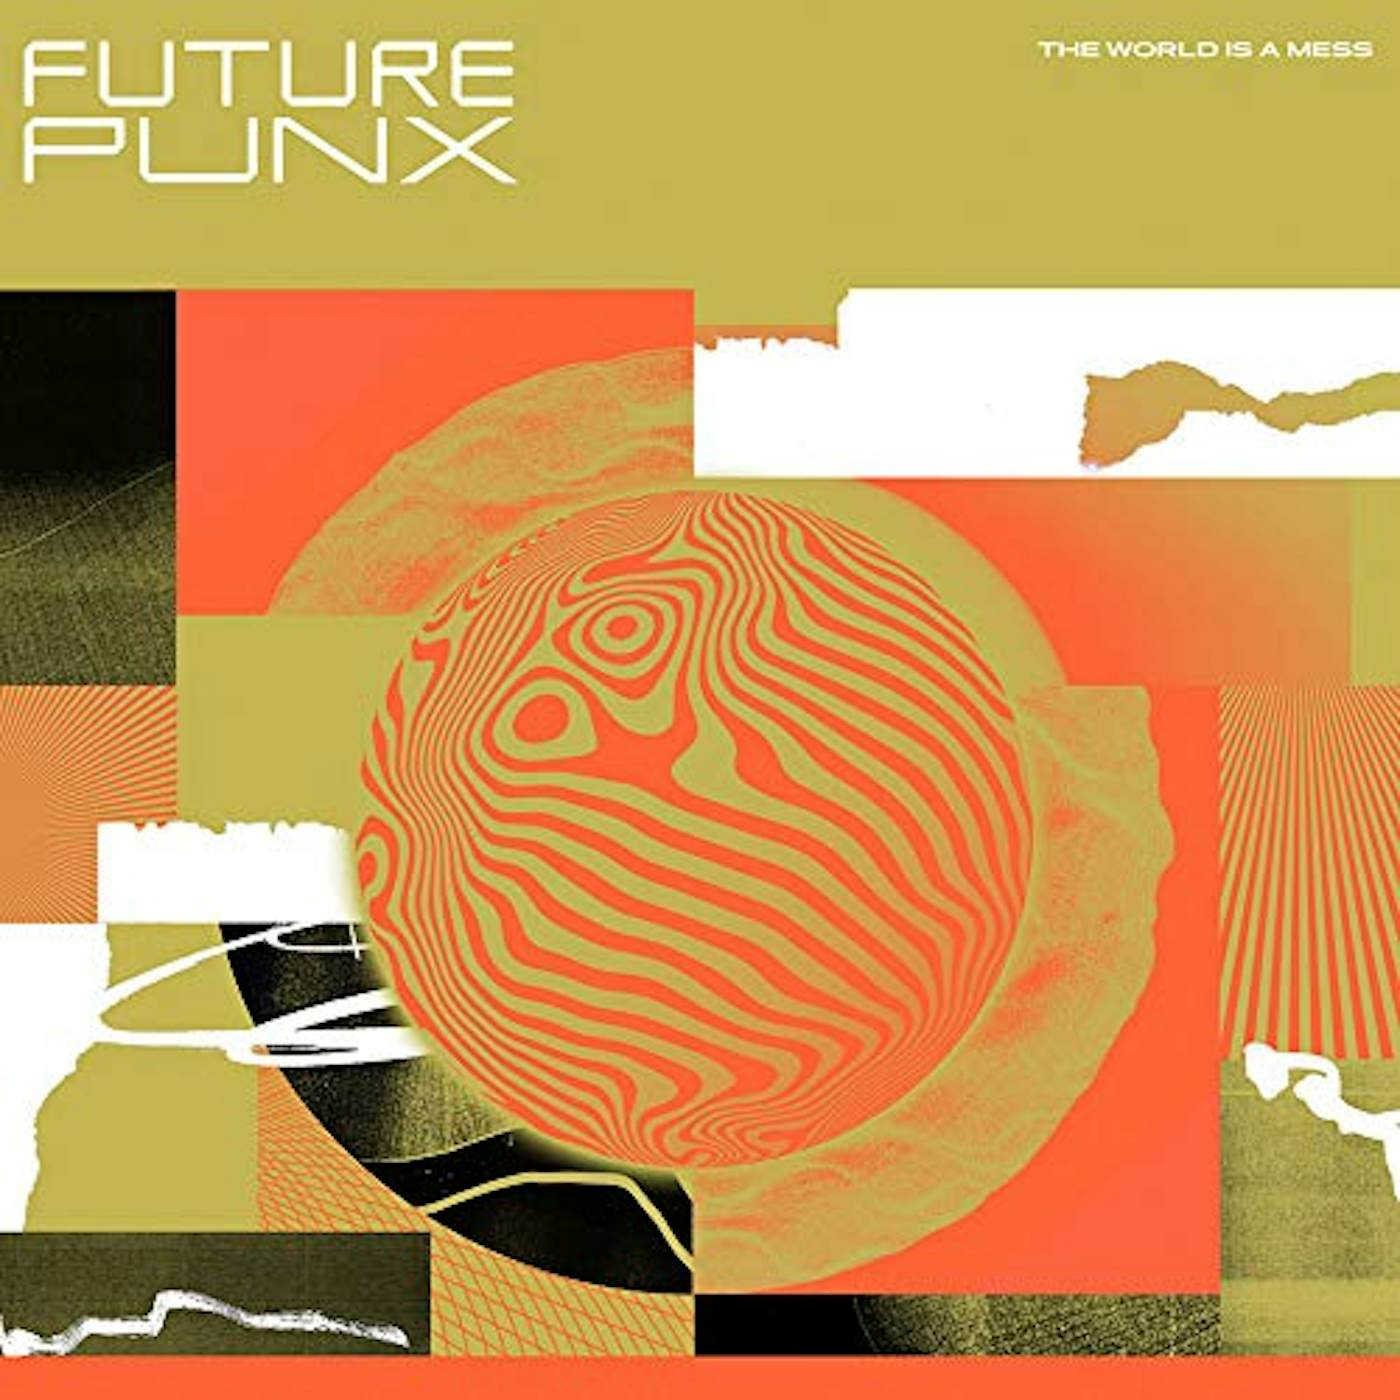 Future Punx WORLD IS A MESS Vinyl Record